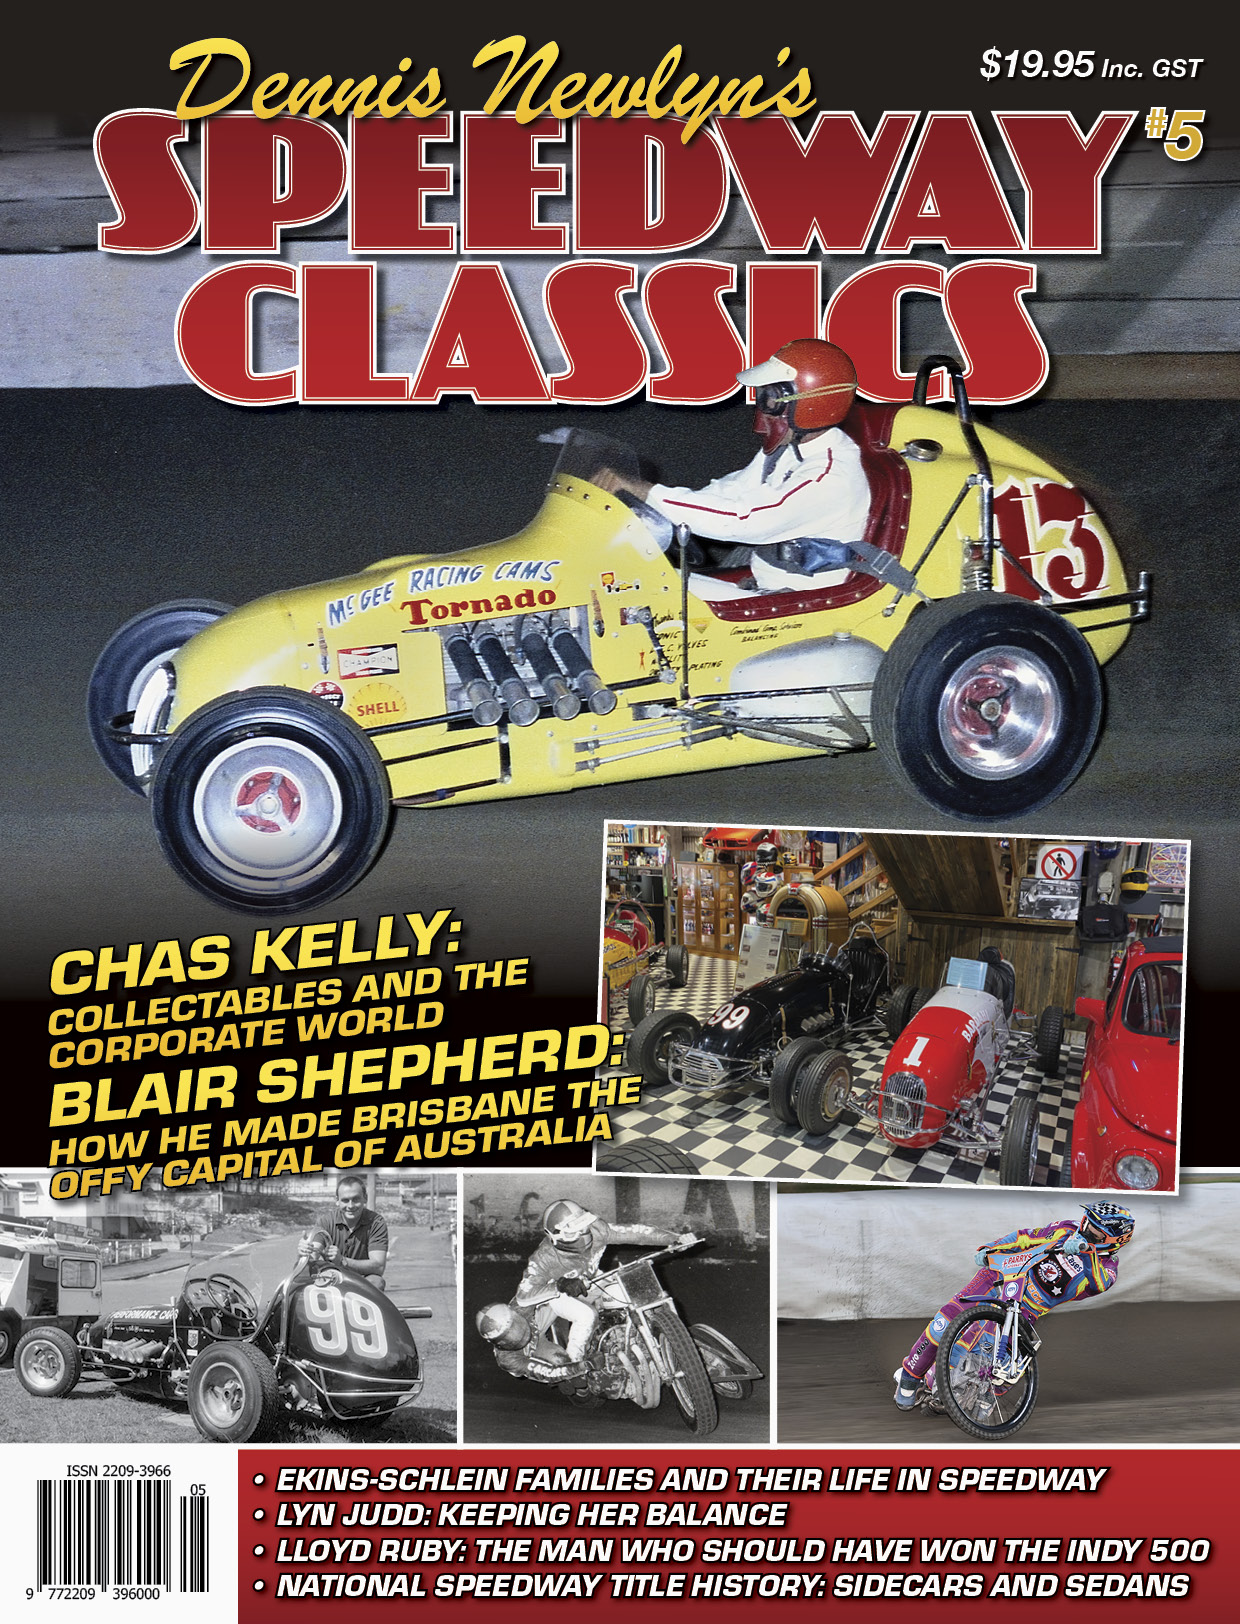 SpeedwayClassics_COVER #5_7.10